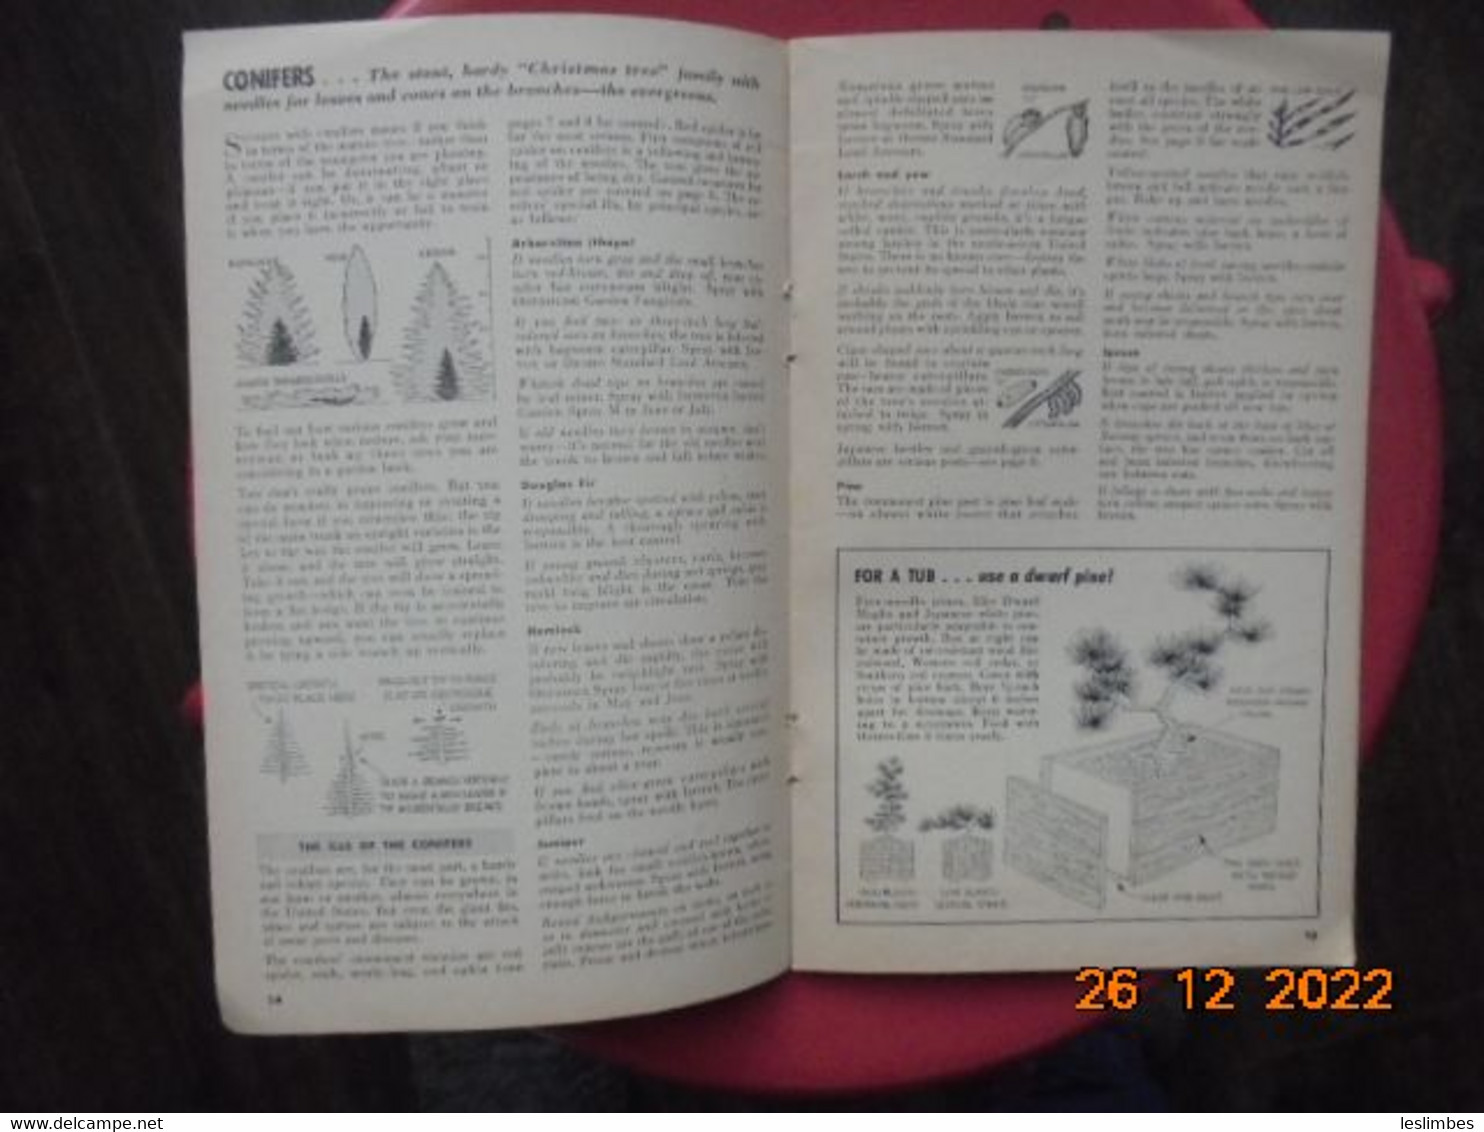 Ortho Garden Book (1956) - Practical Skills